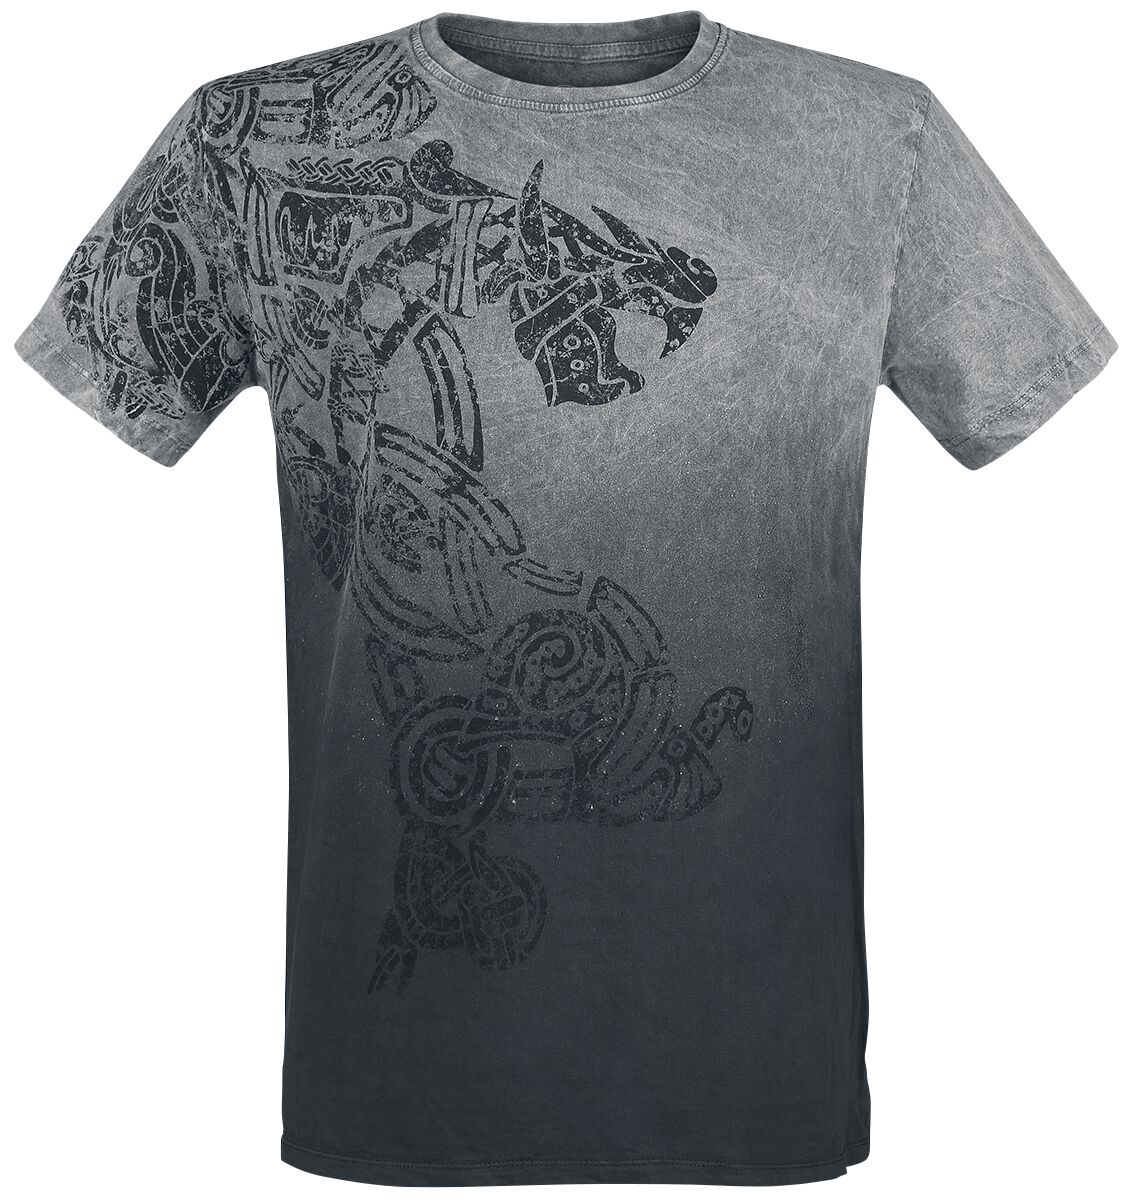 Image of T-Shirt di Outer Vision - Dragon Tattoo - S a 4XL - Uomo - grigio